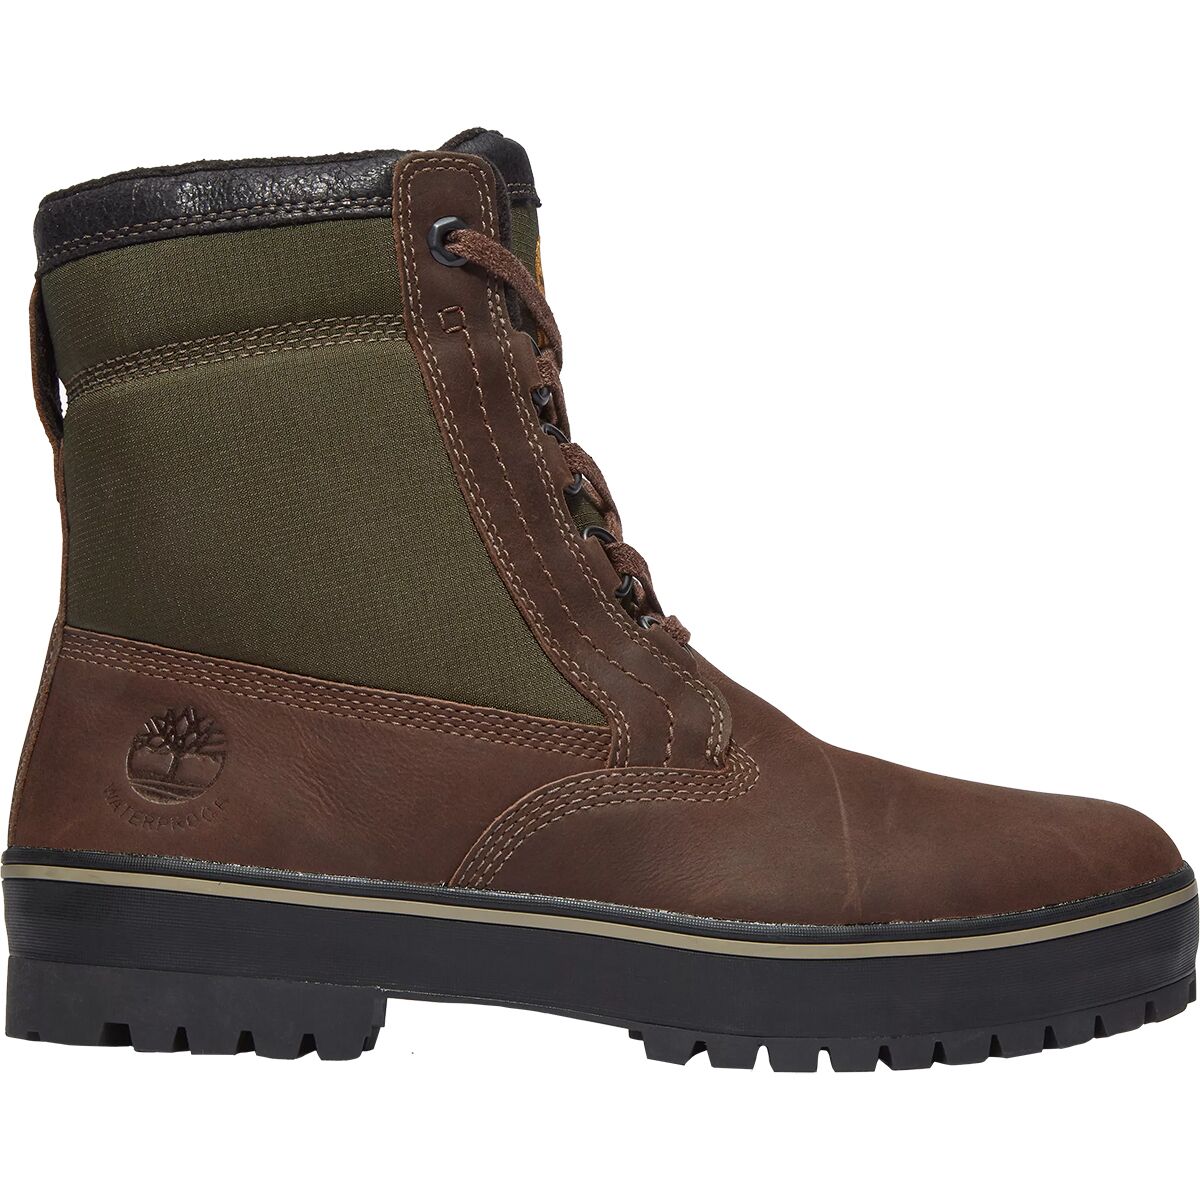 Timberland Spruce Mountain Waterproof Warm Lined Boot - Men's